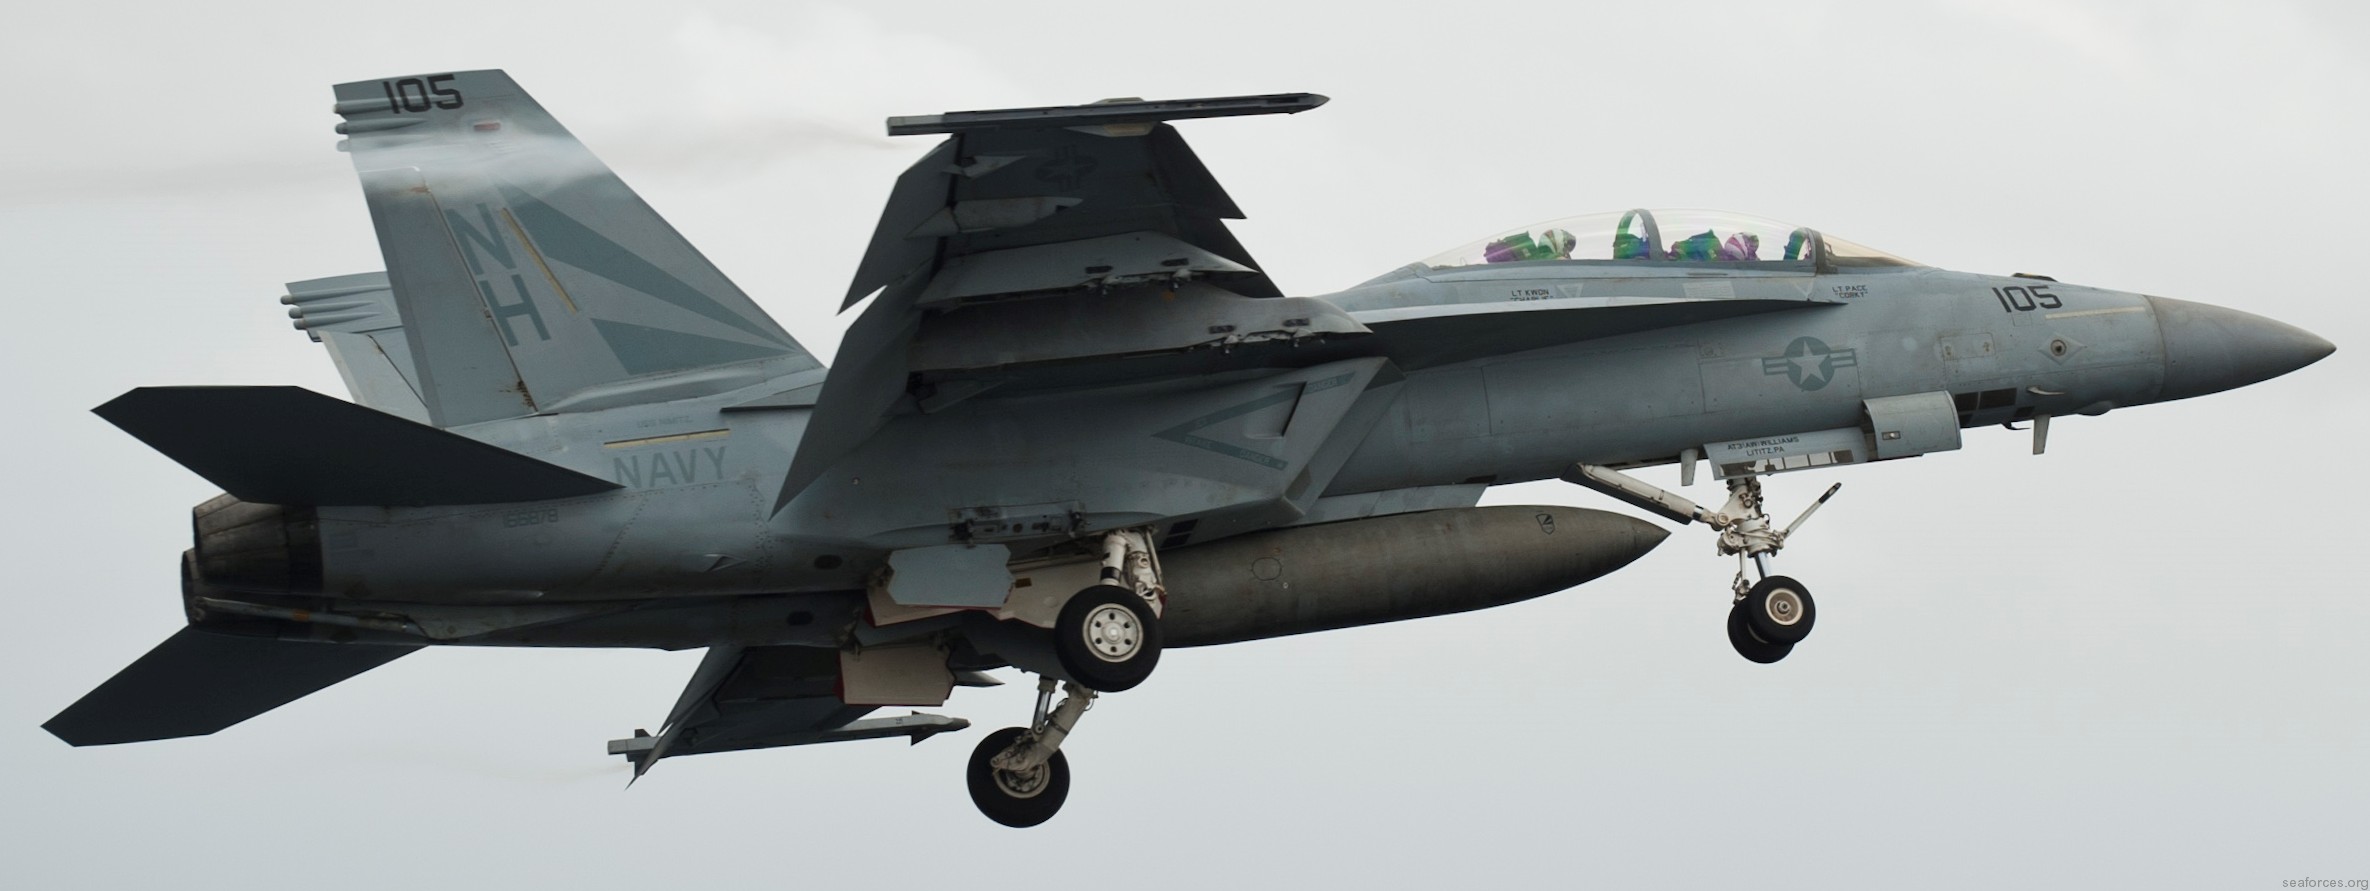 vfa-154 black knights strike fighter squadron navy f/a-18f super hornet carrier air wing cvw-11 uss nimitz cvn-68 43